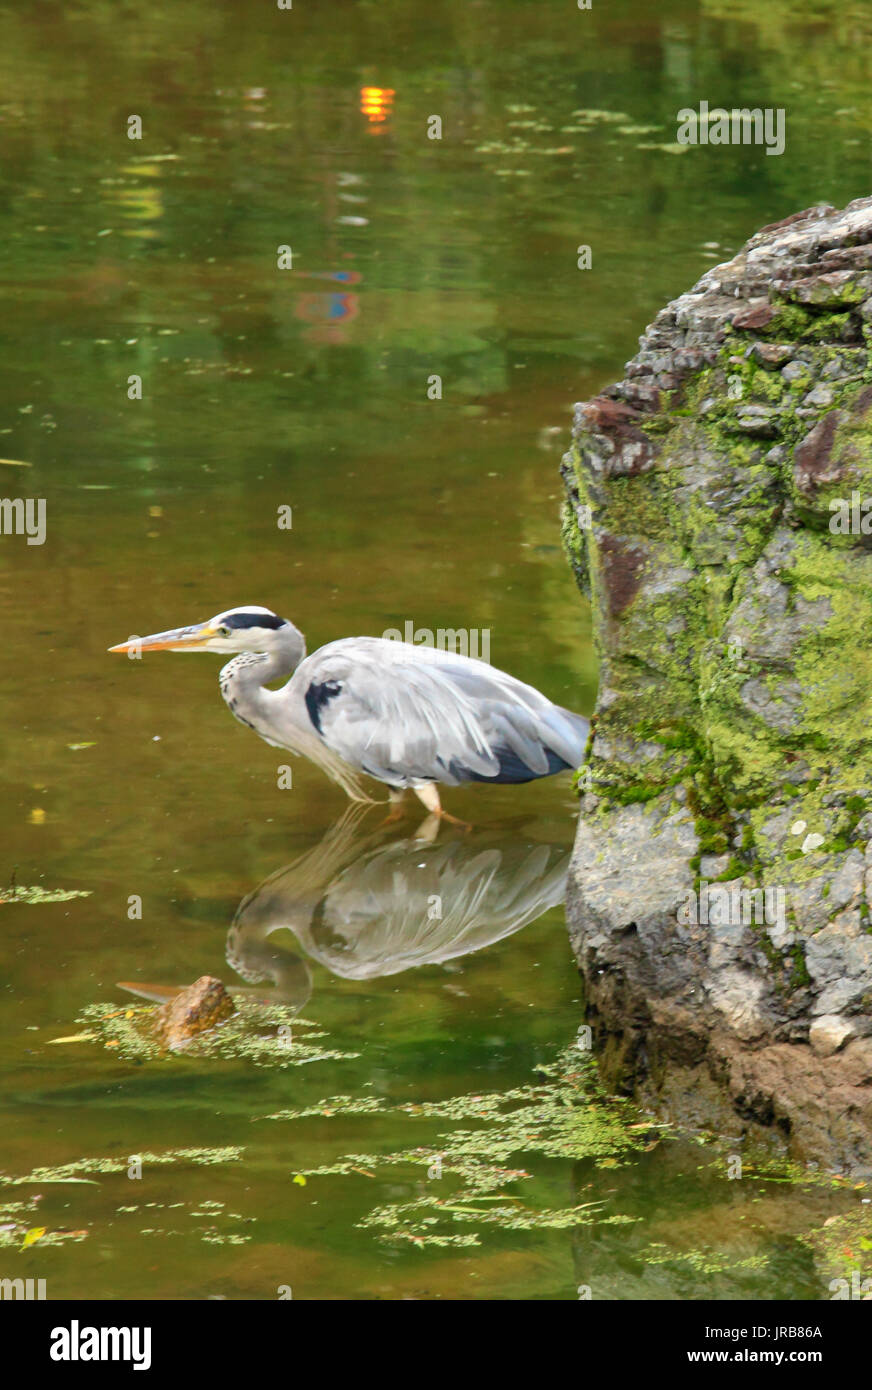 Japan, Kyoto, Maruyama Park, pond, aquatic bird, Stock Photo